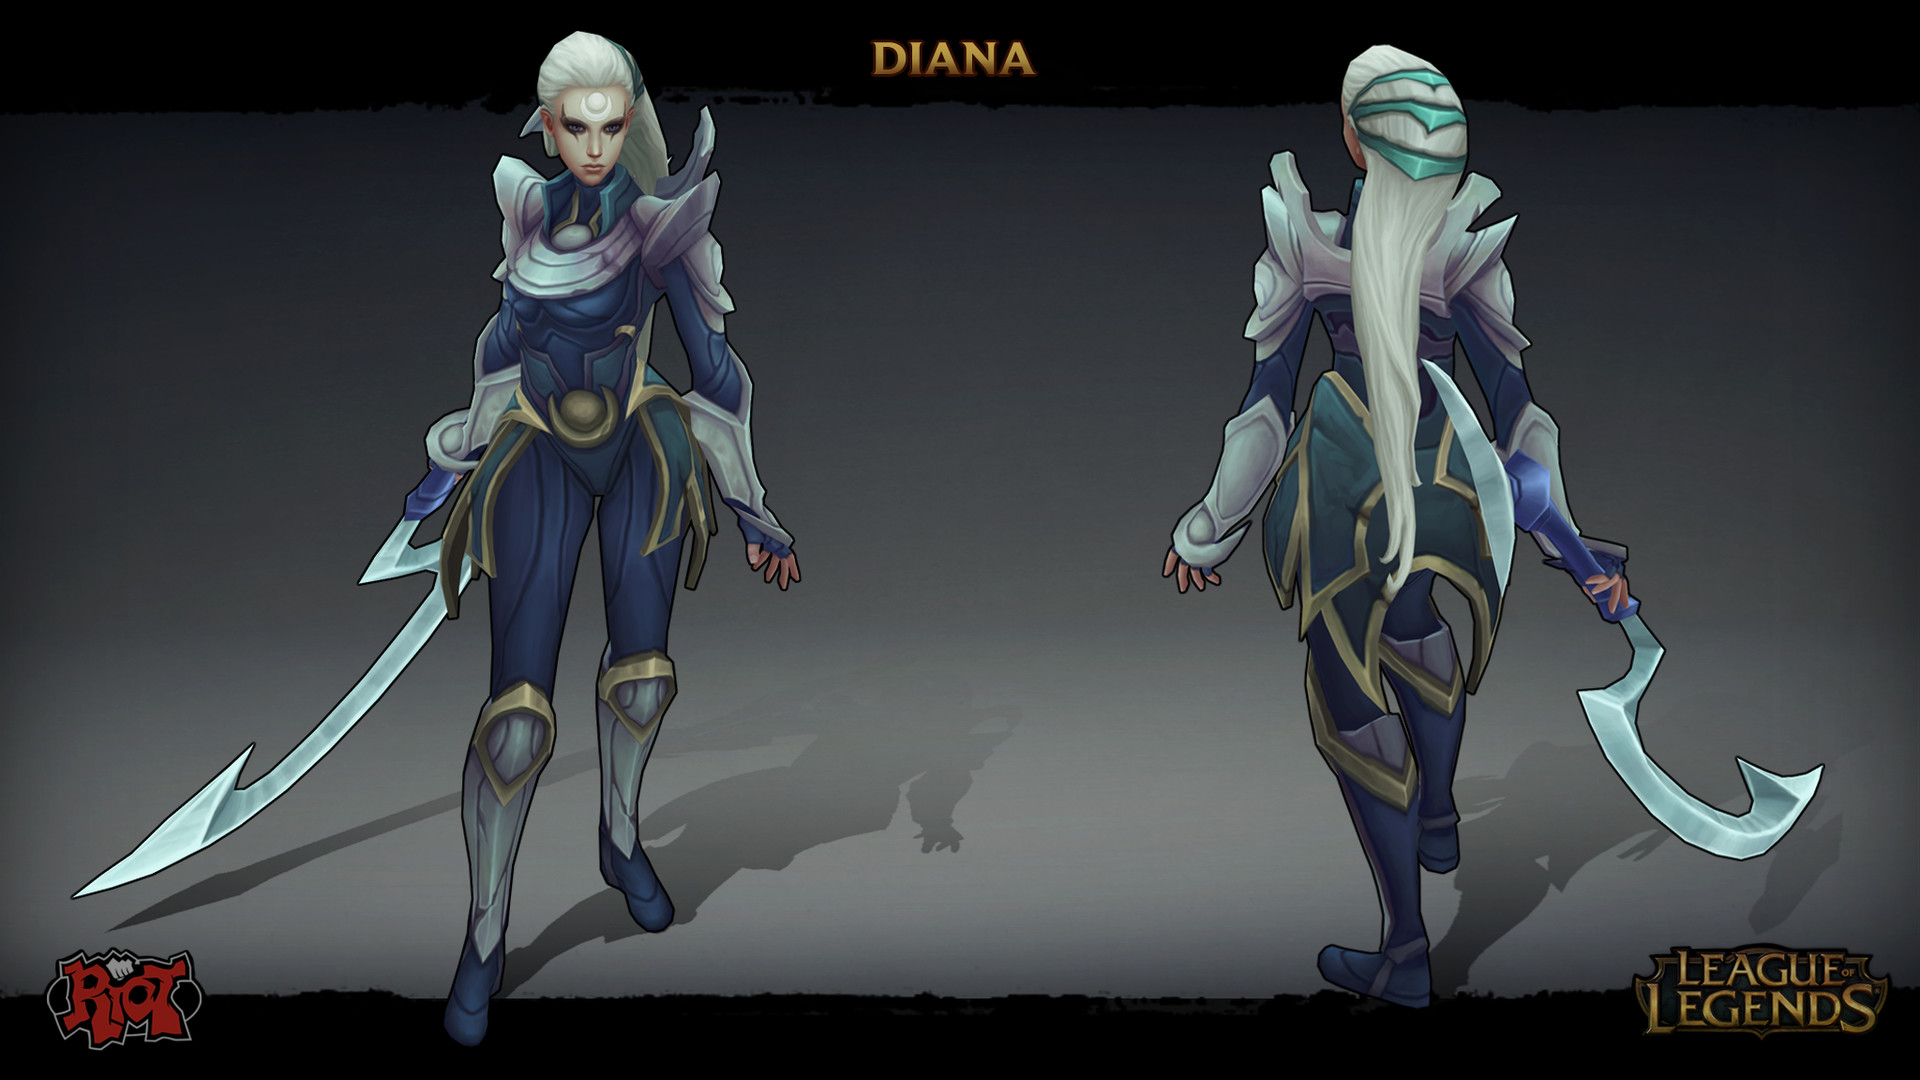 ArtStation - Diana Animated Wallpaper - League of Legends